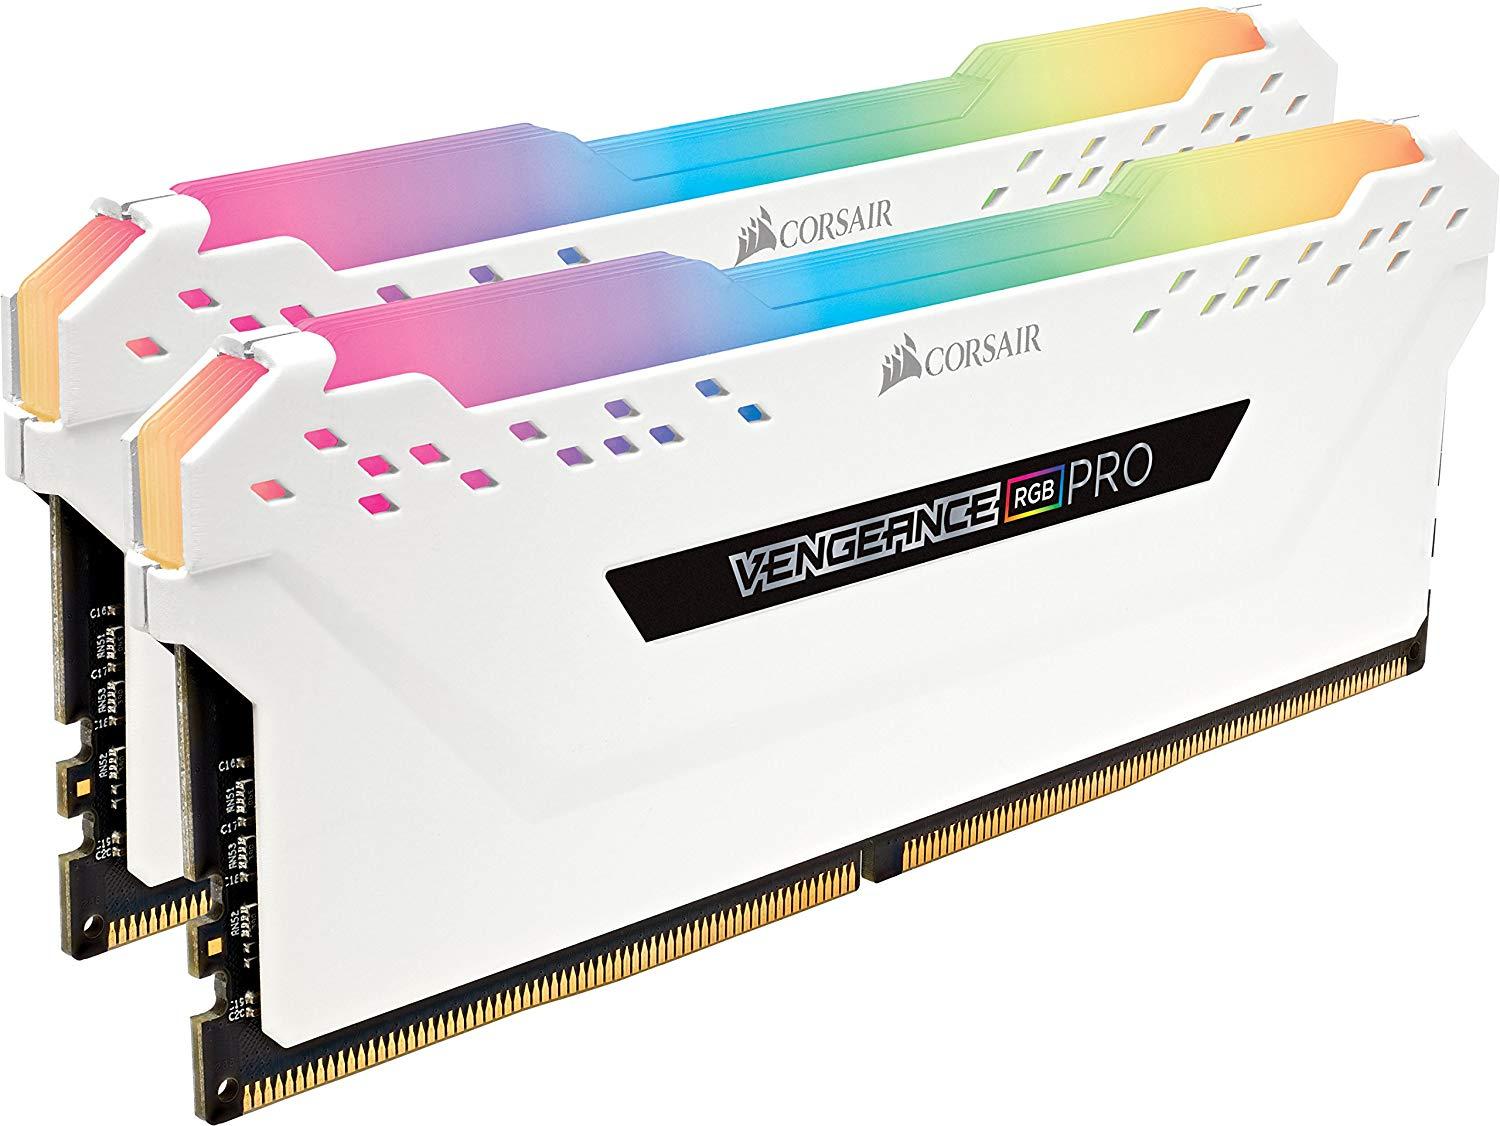 16GB Corsair Vengeance RGB Pro DDR4 3200 Desktop Memory for $77.99 Shipped